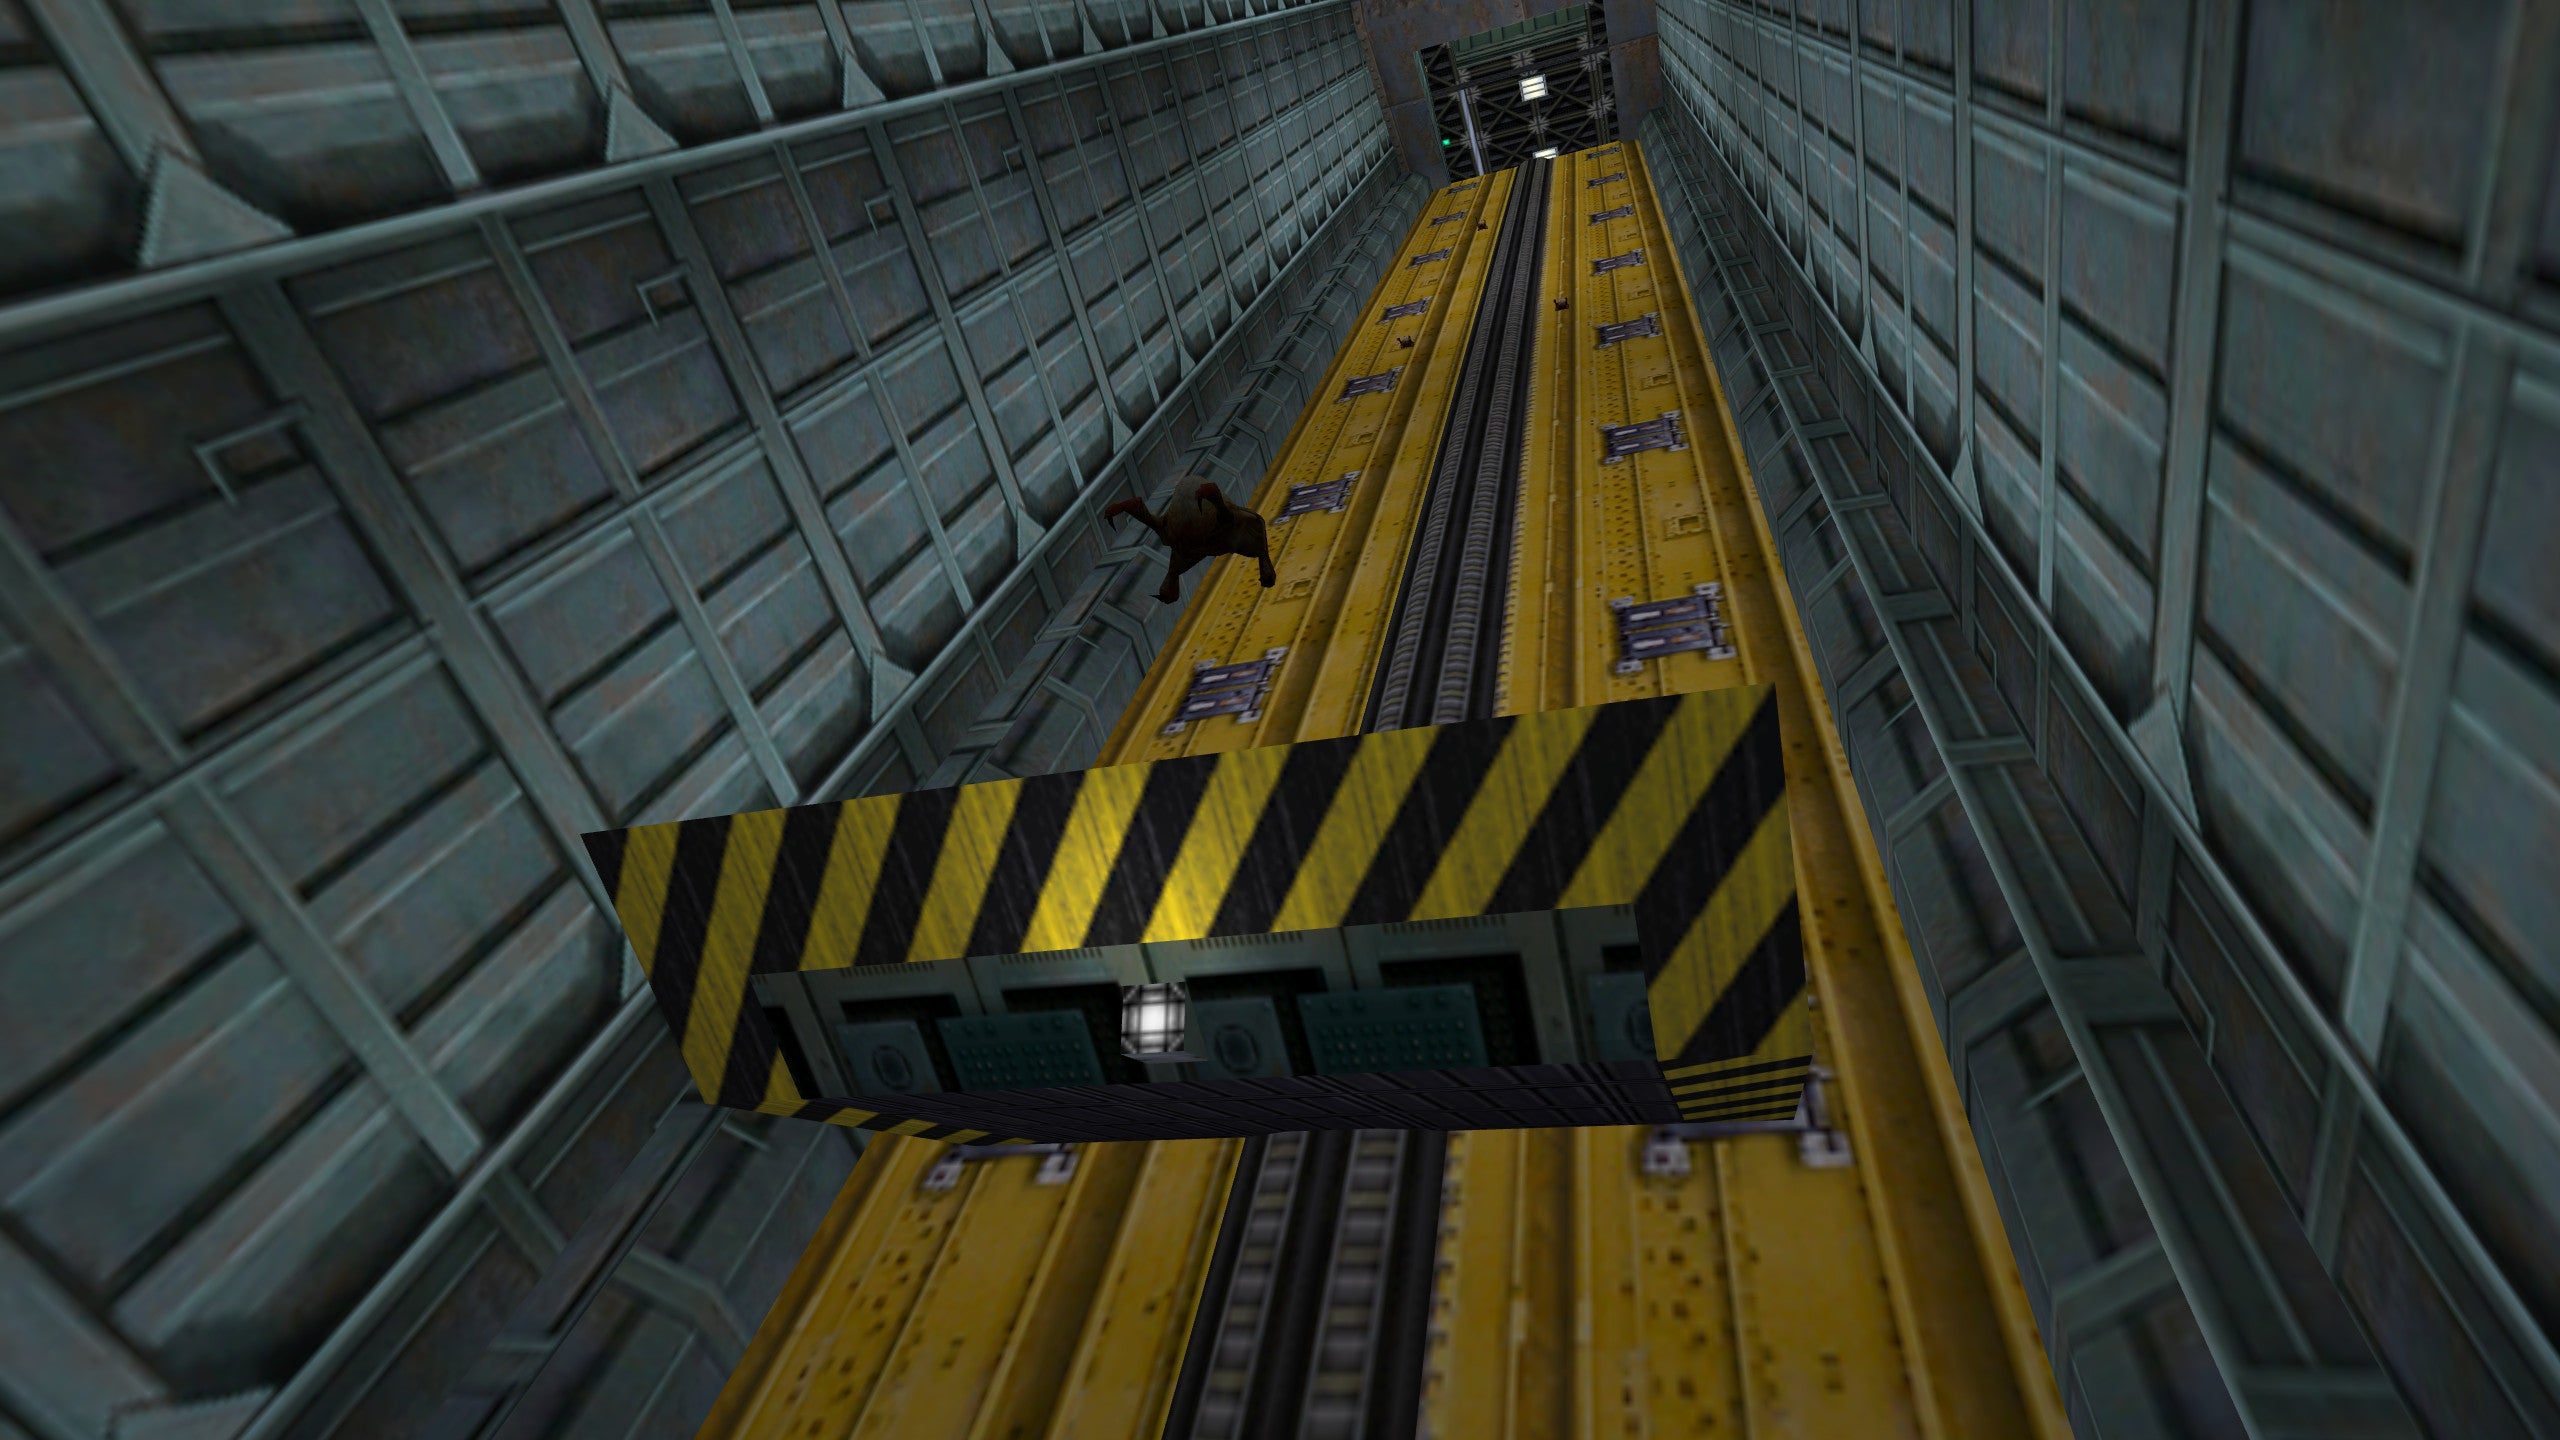 A headcrab rockets down a Black Mesa funicular shaft in a Half-Life screenshot.